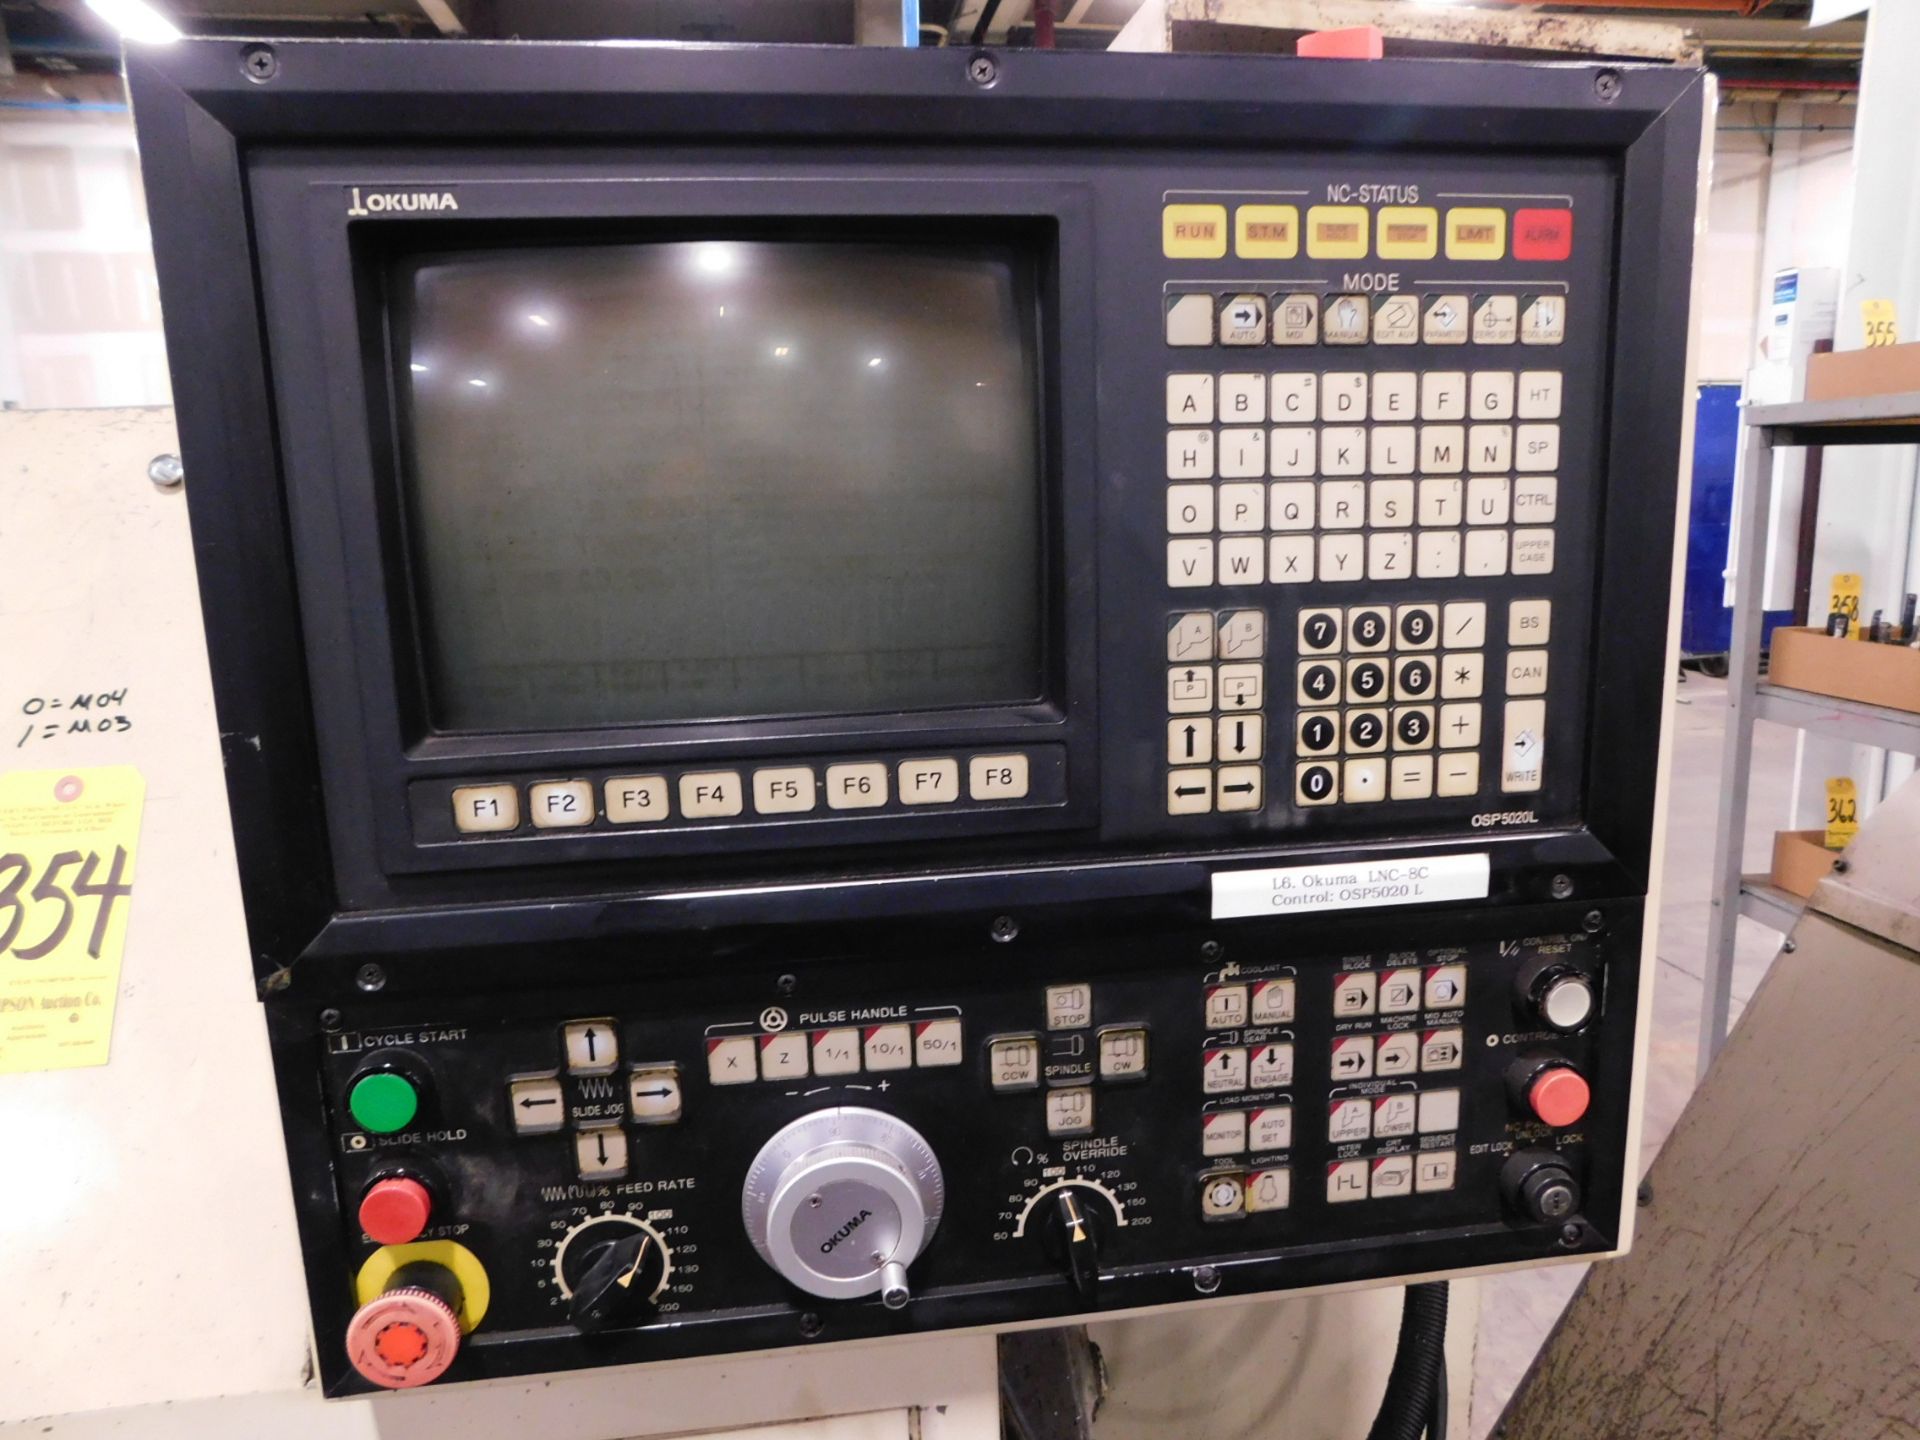 Okuma Cadet LNC-8 CNC Turning Center, s/n 0379, New 1996, Okuma OSP-5020L CNC Control, 3” - Image 4 of 10